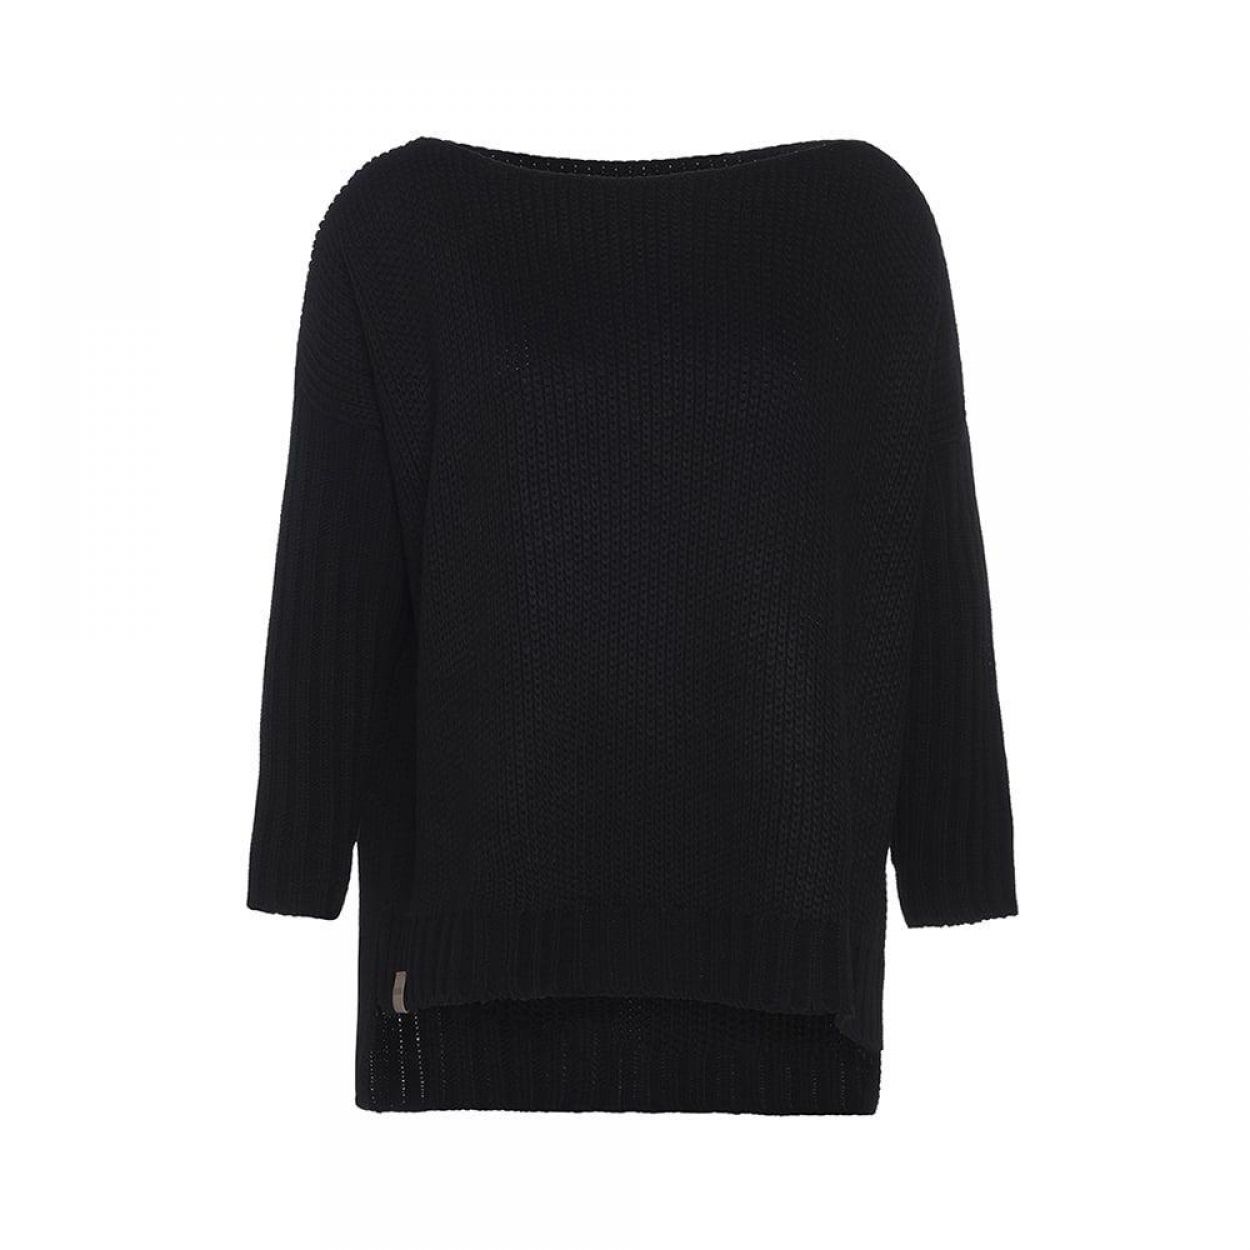 Knit Factory Kylie Sweater (KF-156.125.000.50 black) - WeekendMode